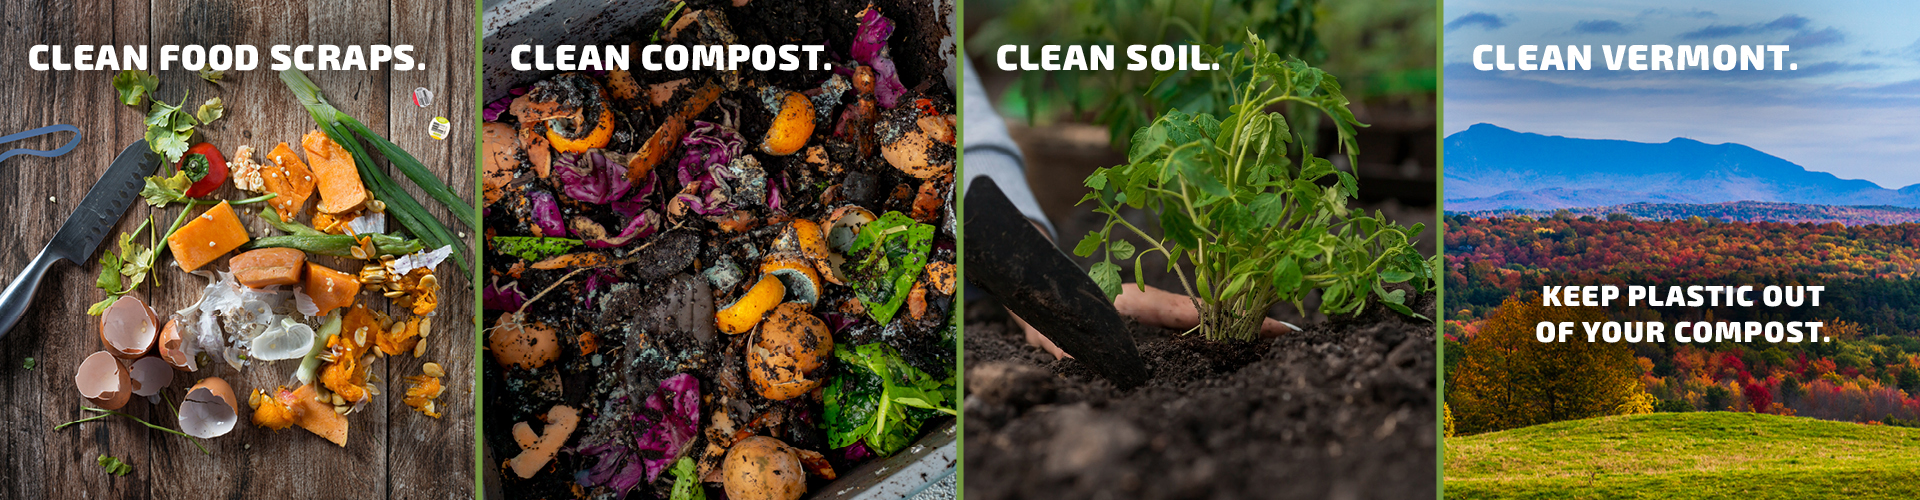 Photos of clean food scraps, clean compost, clean soil and a Vermont farm